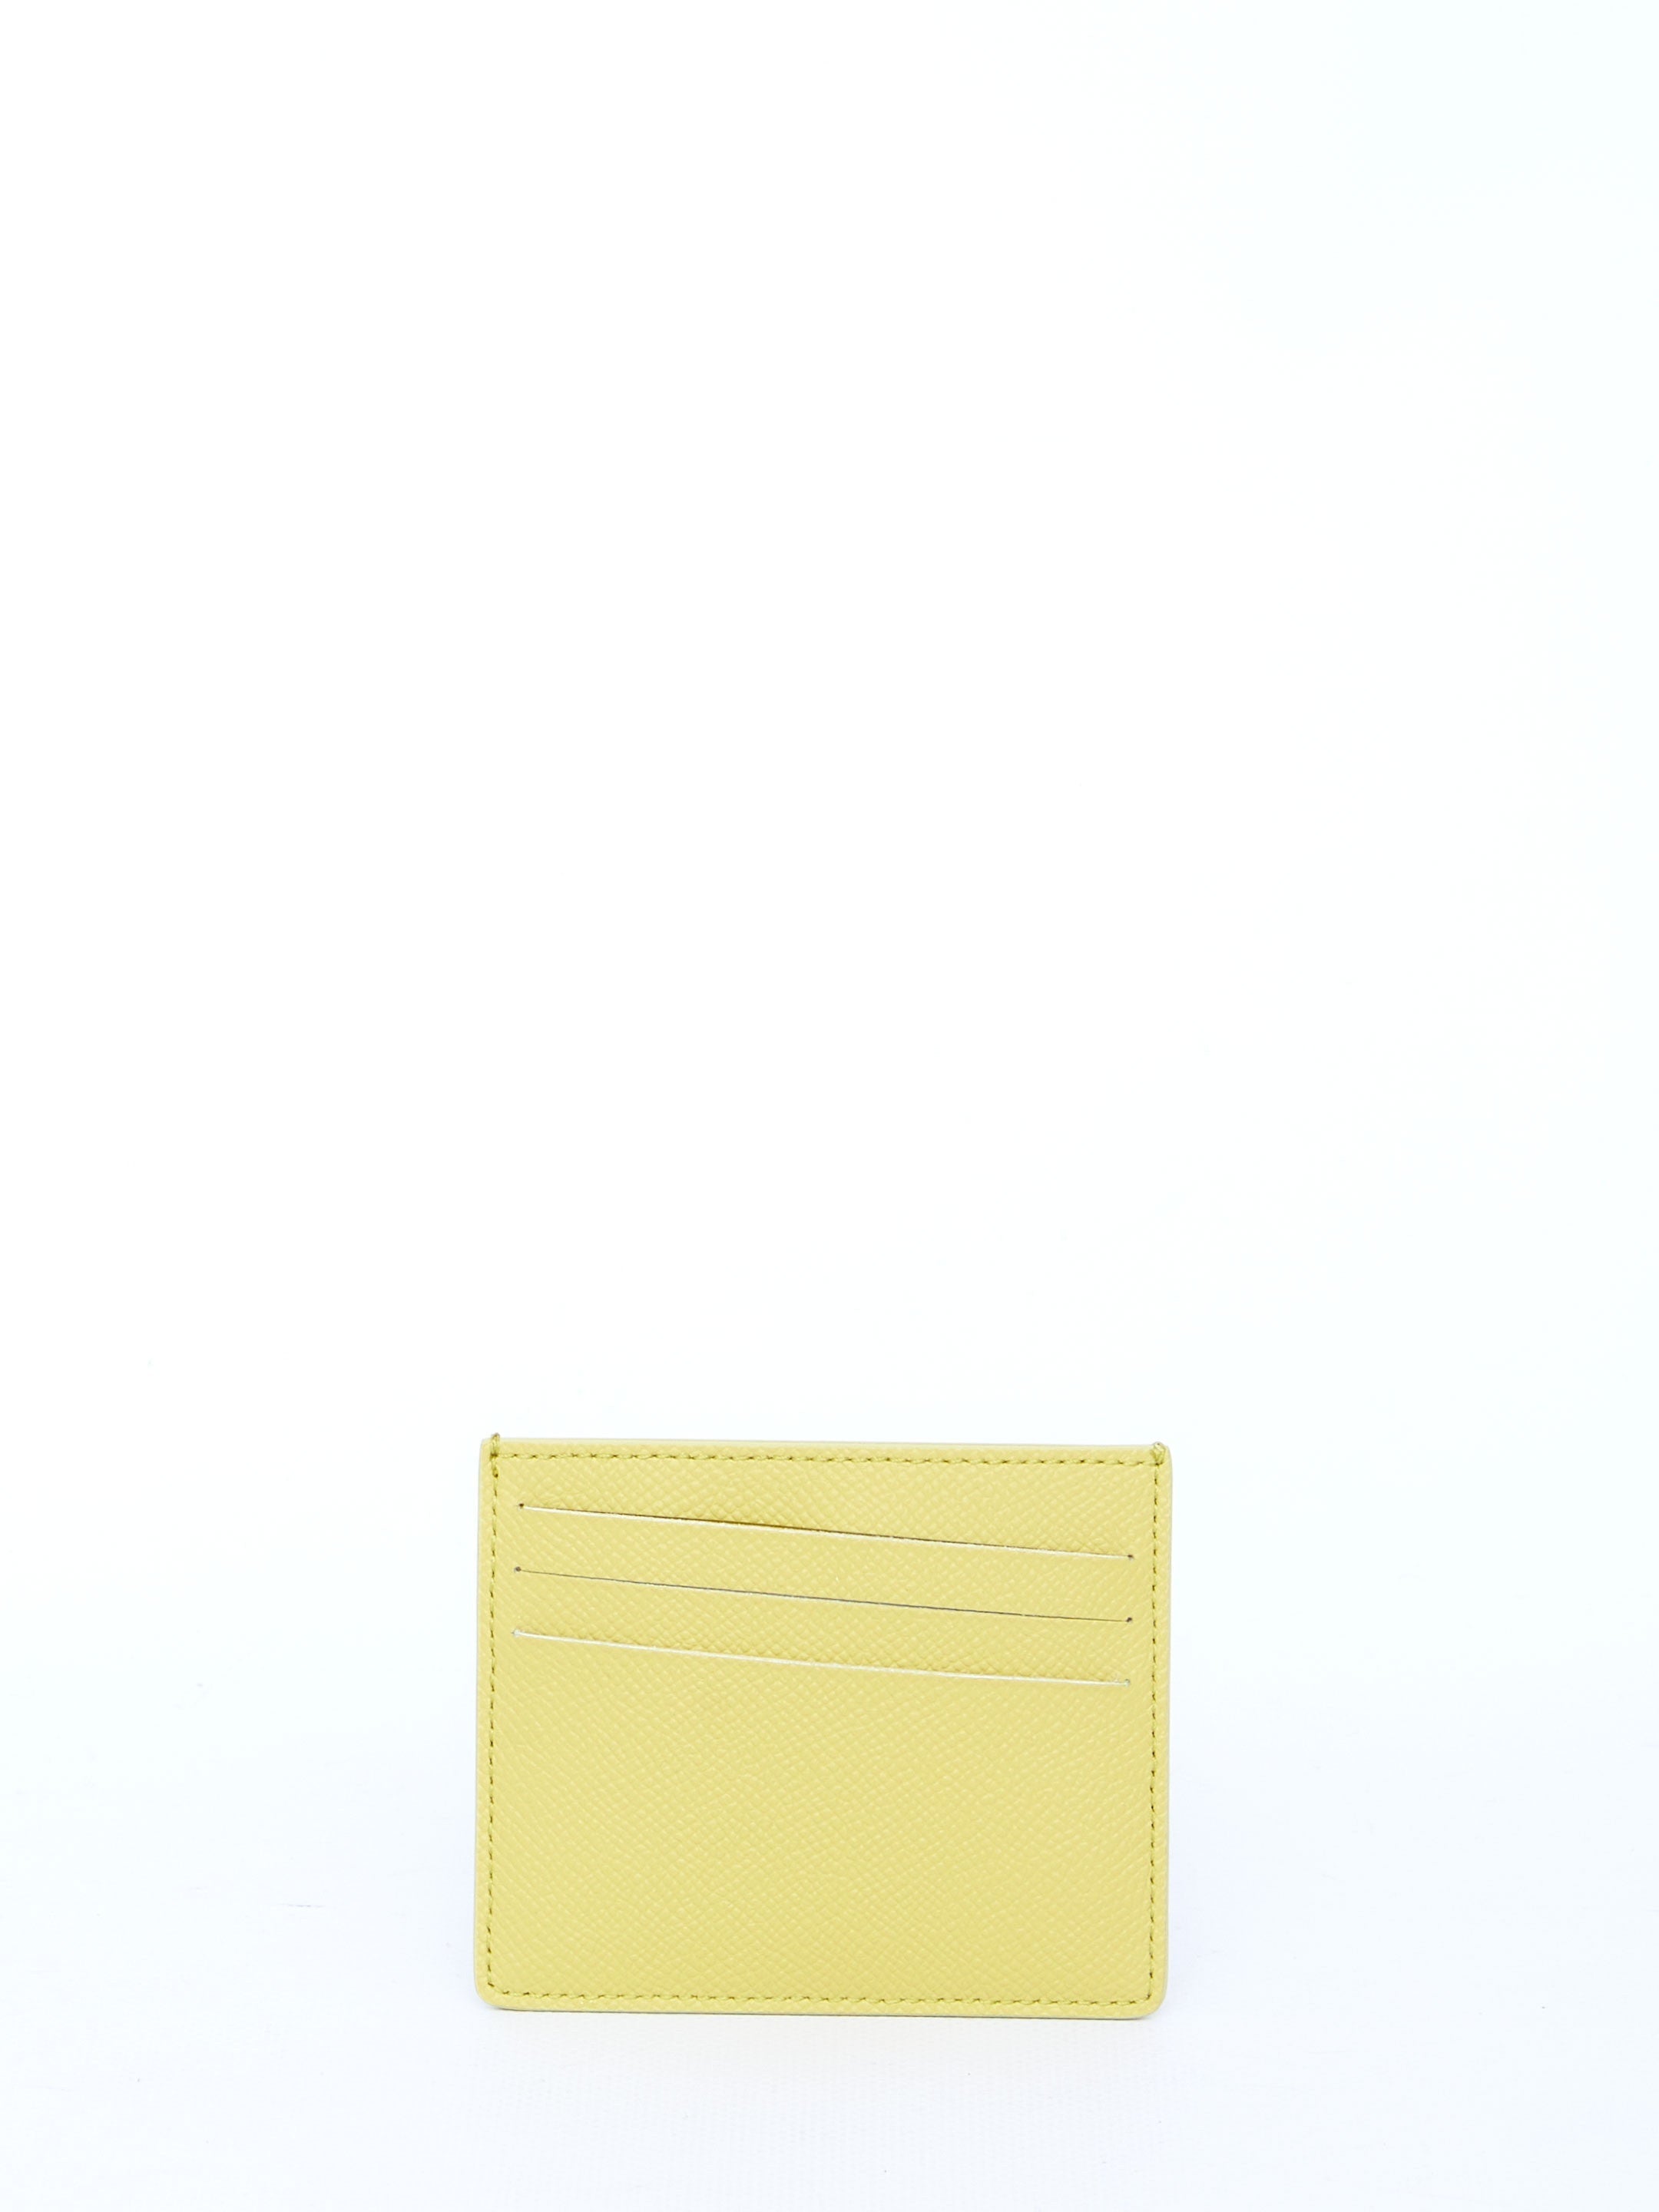 MAISON-MARGIELA-OUTLET-SALE-Lime-leather-cardholder-Taschen-QT-GREEN-ARCHIVE-COLLECTION.jpg